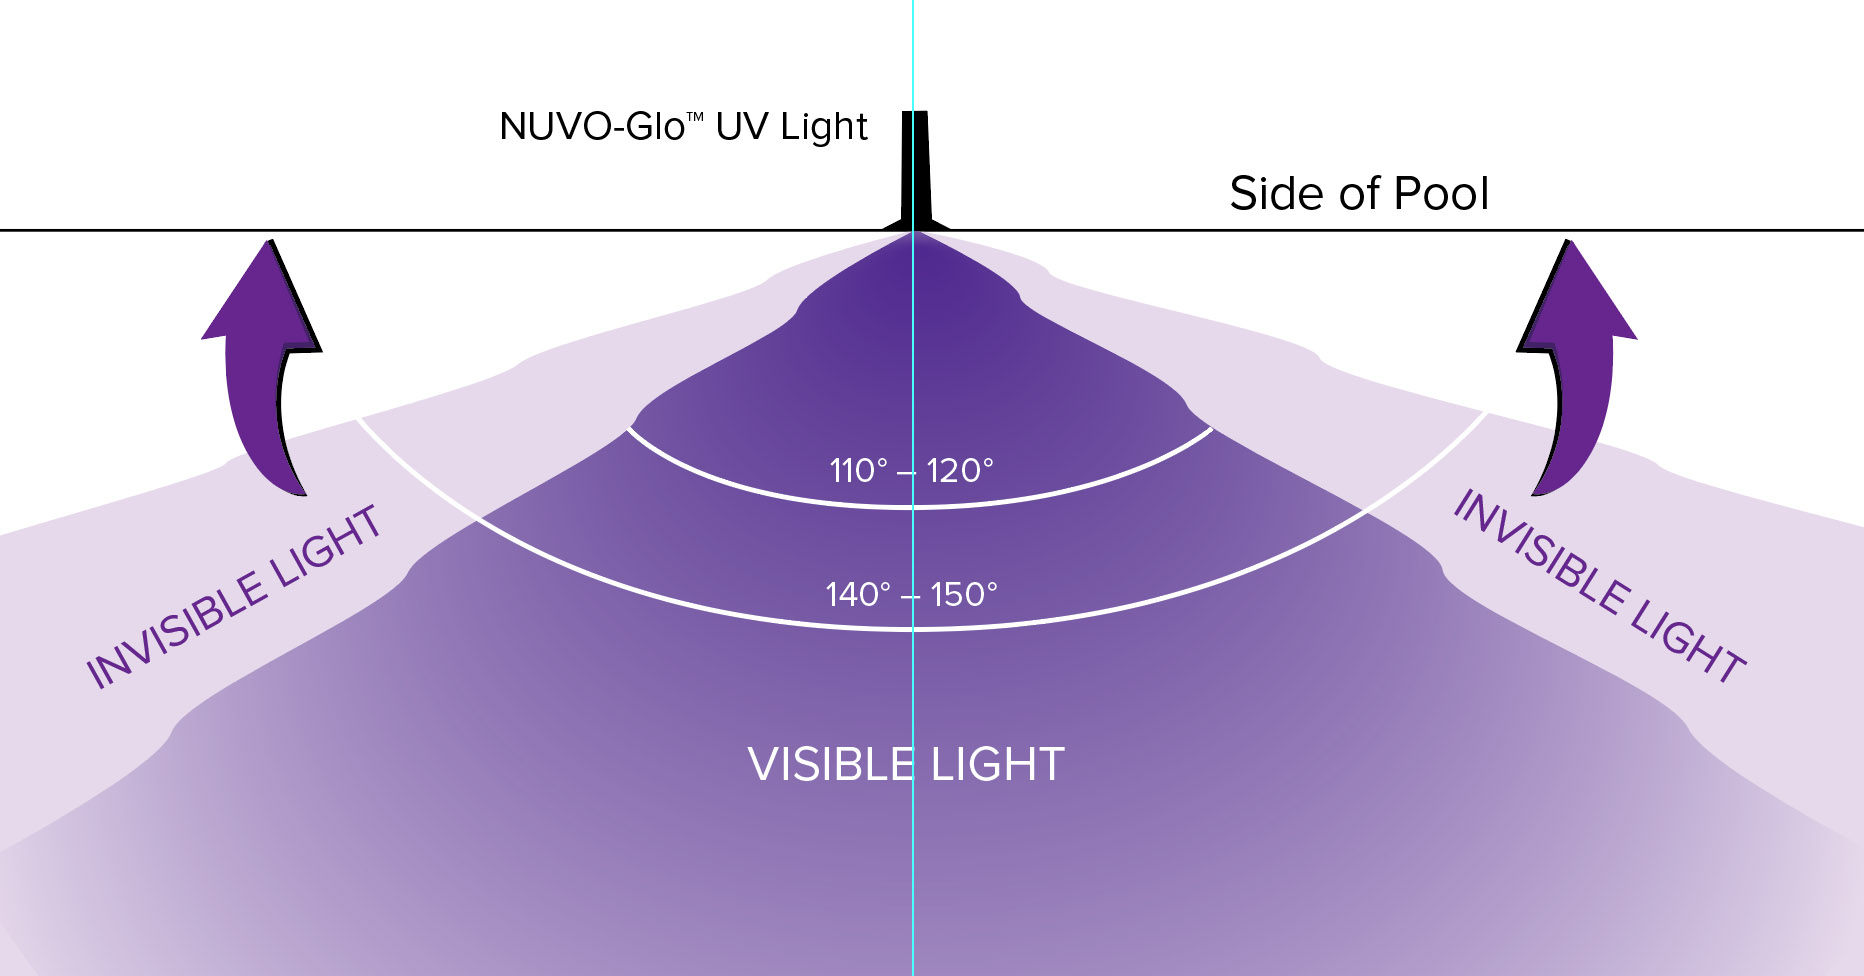 NUVO-Glo UV Light Spread